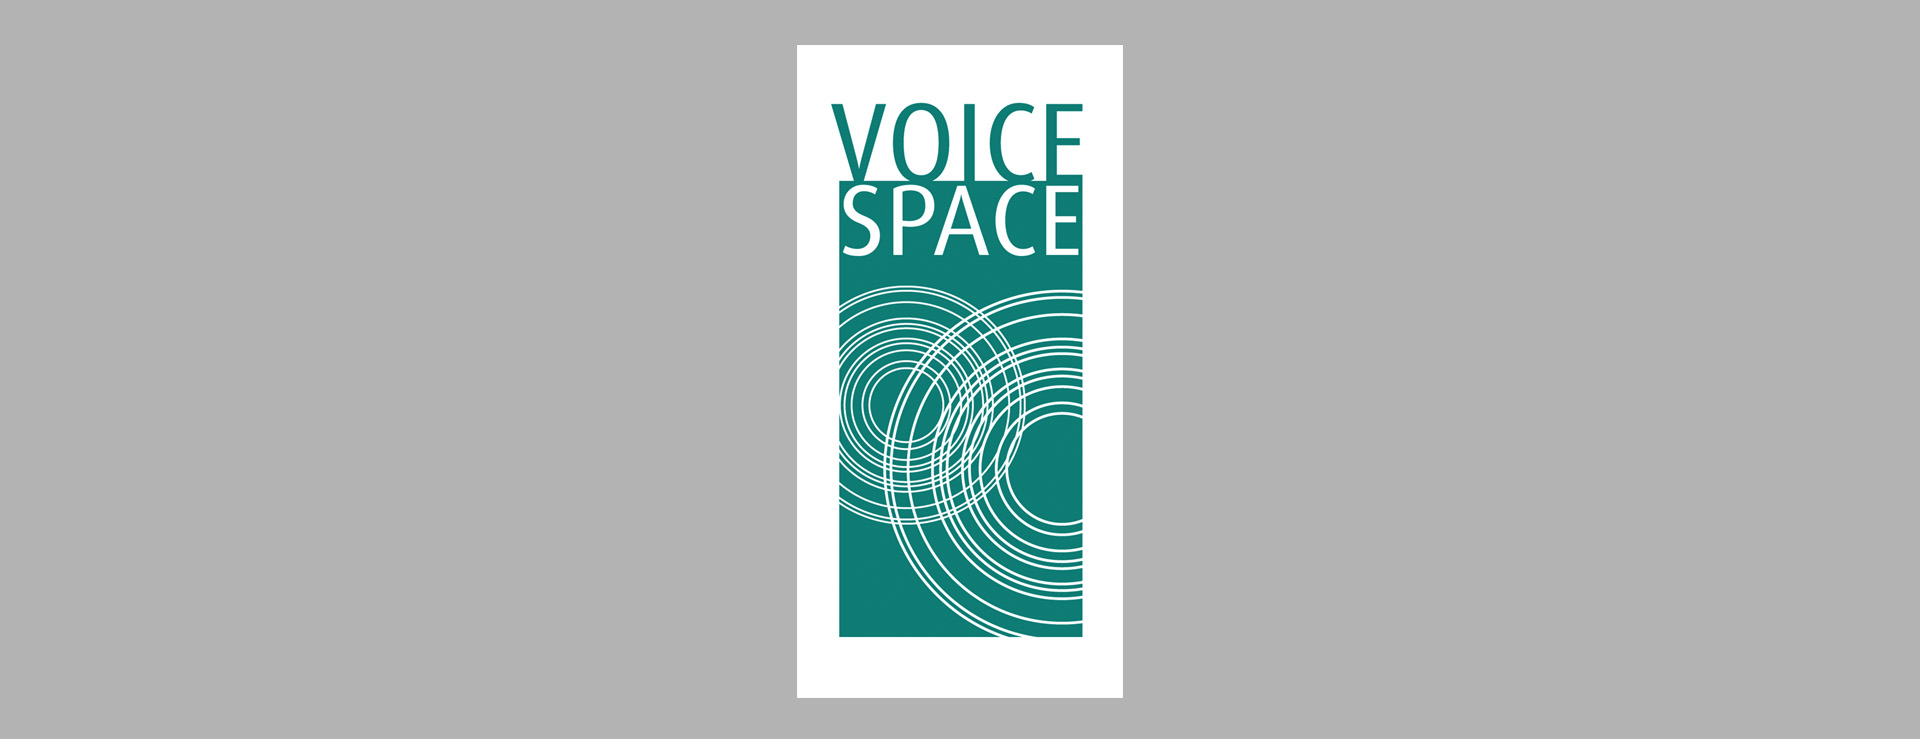 Voicespace